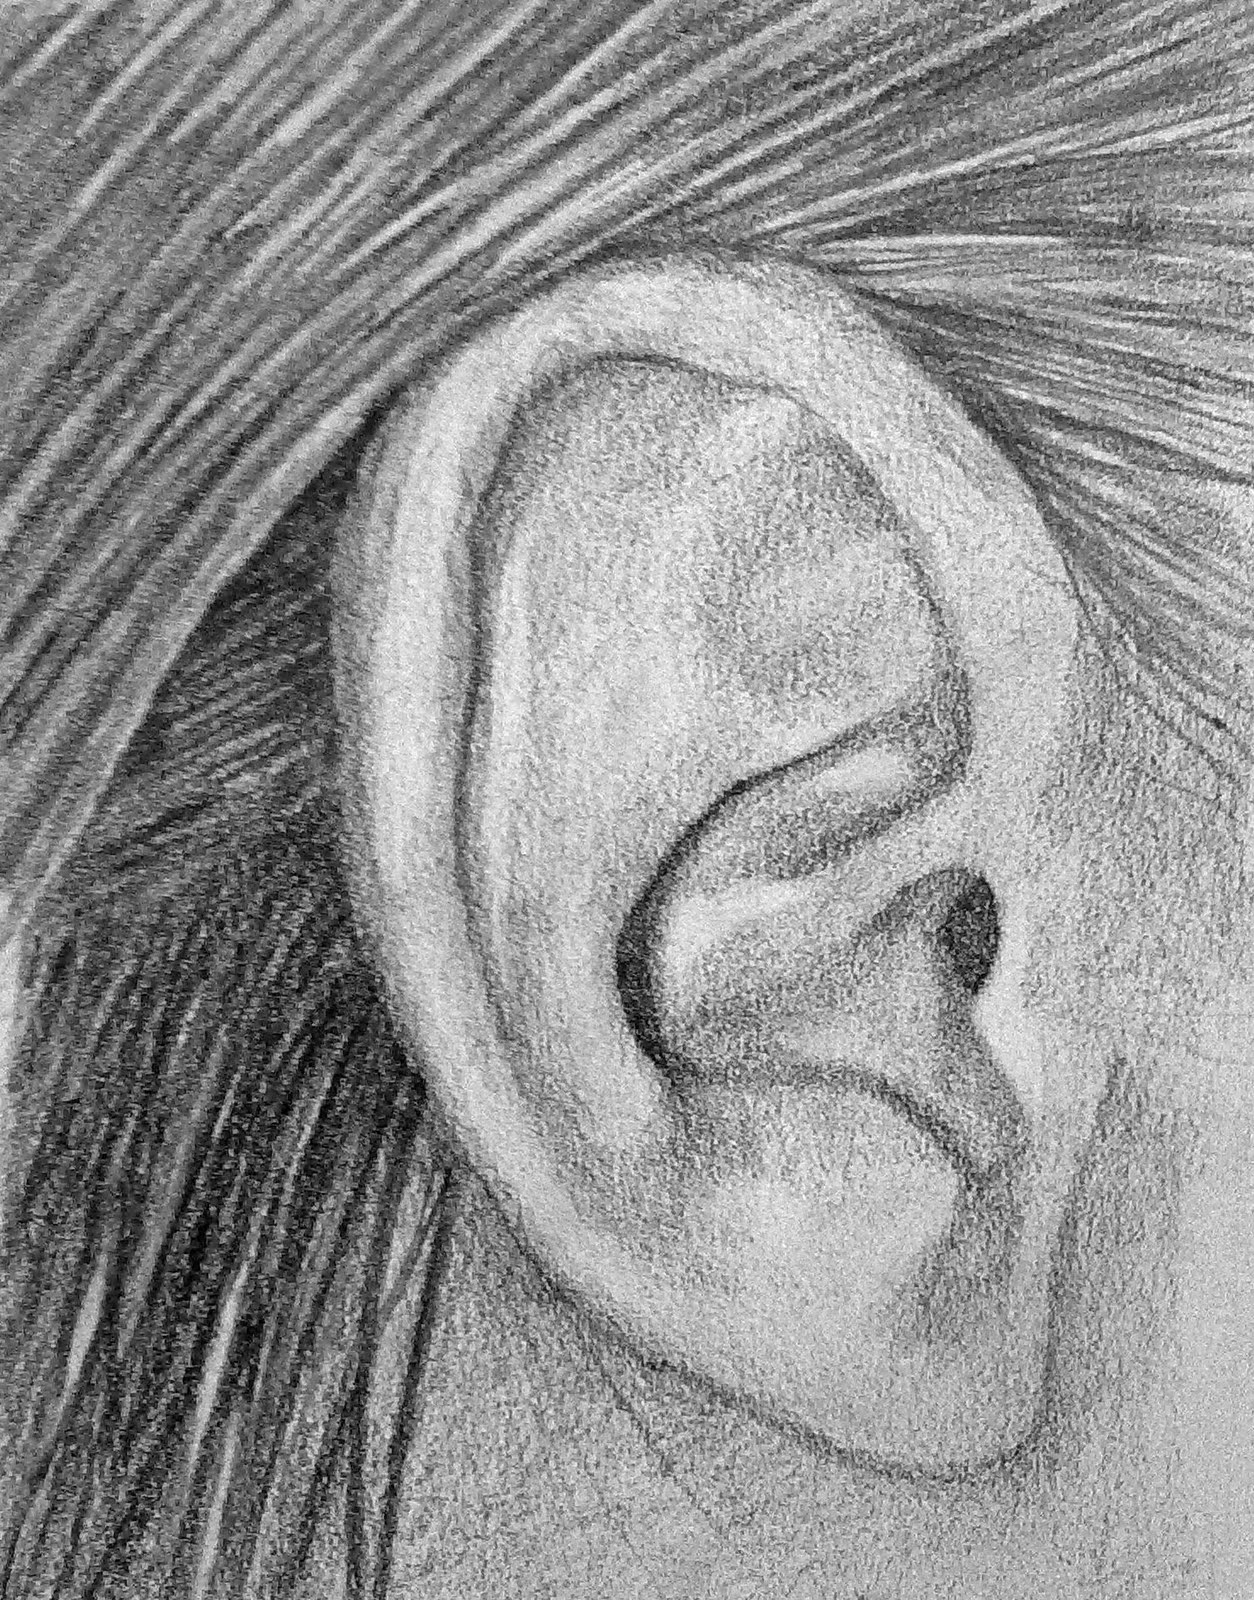 Ear Drawing Pics